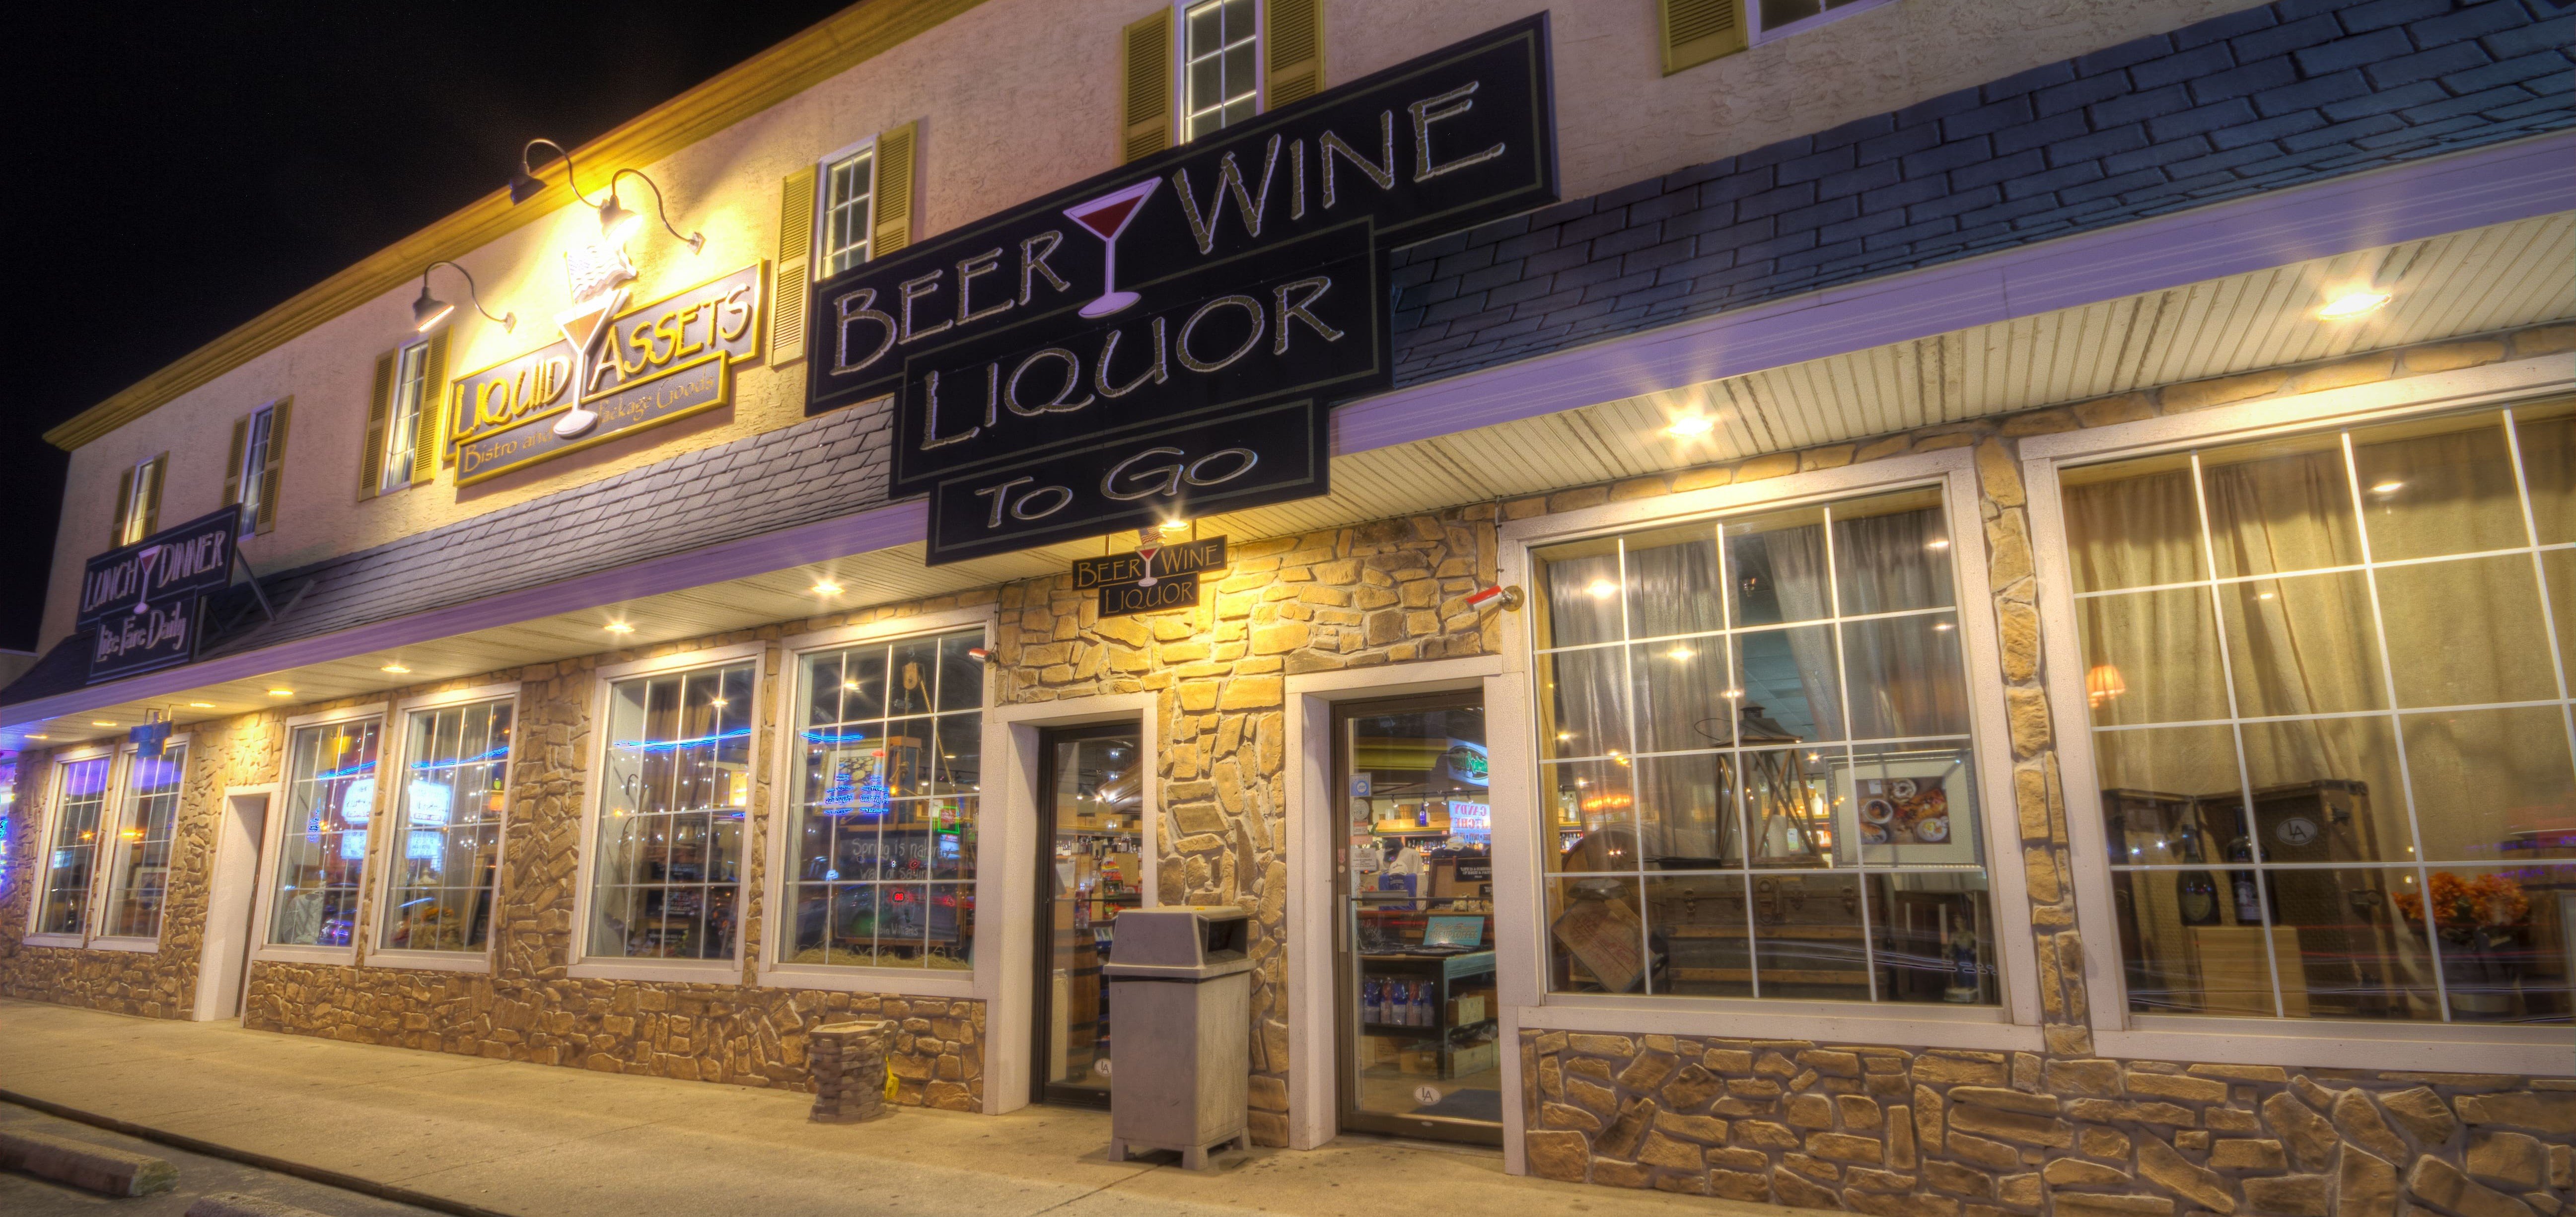 Contact Ocean City MD Wine Bar & Restaurant Liquid Assets